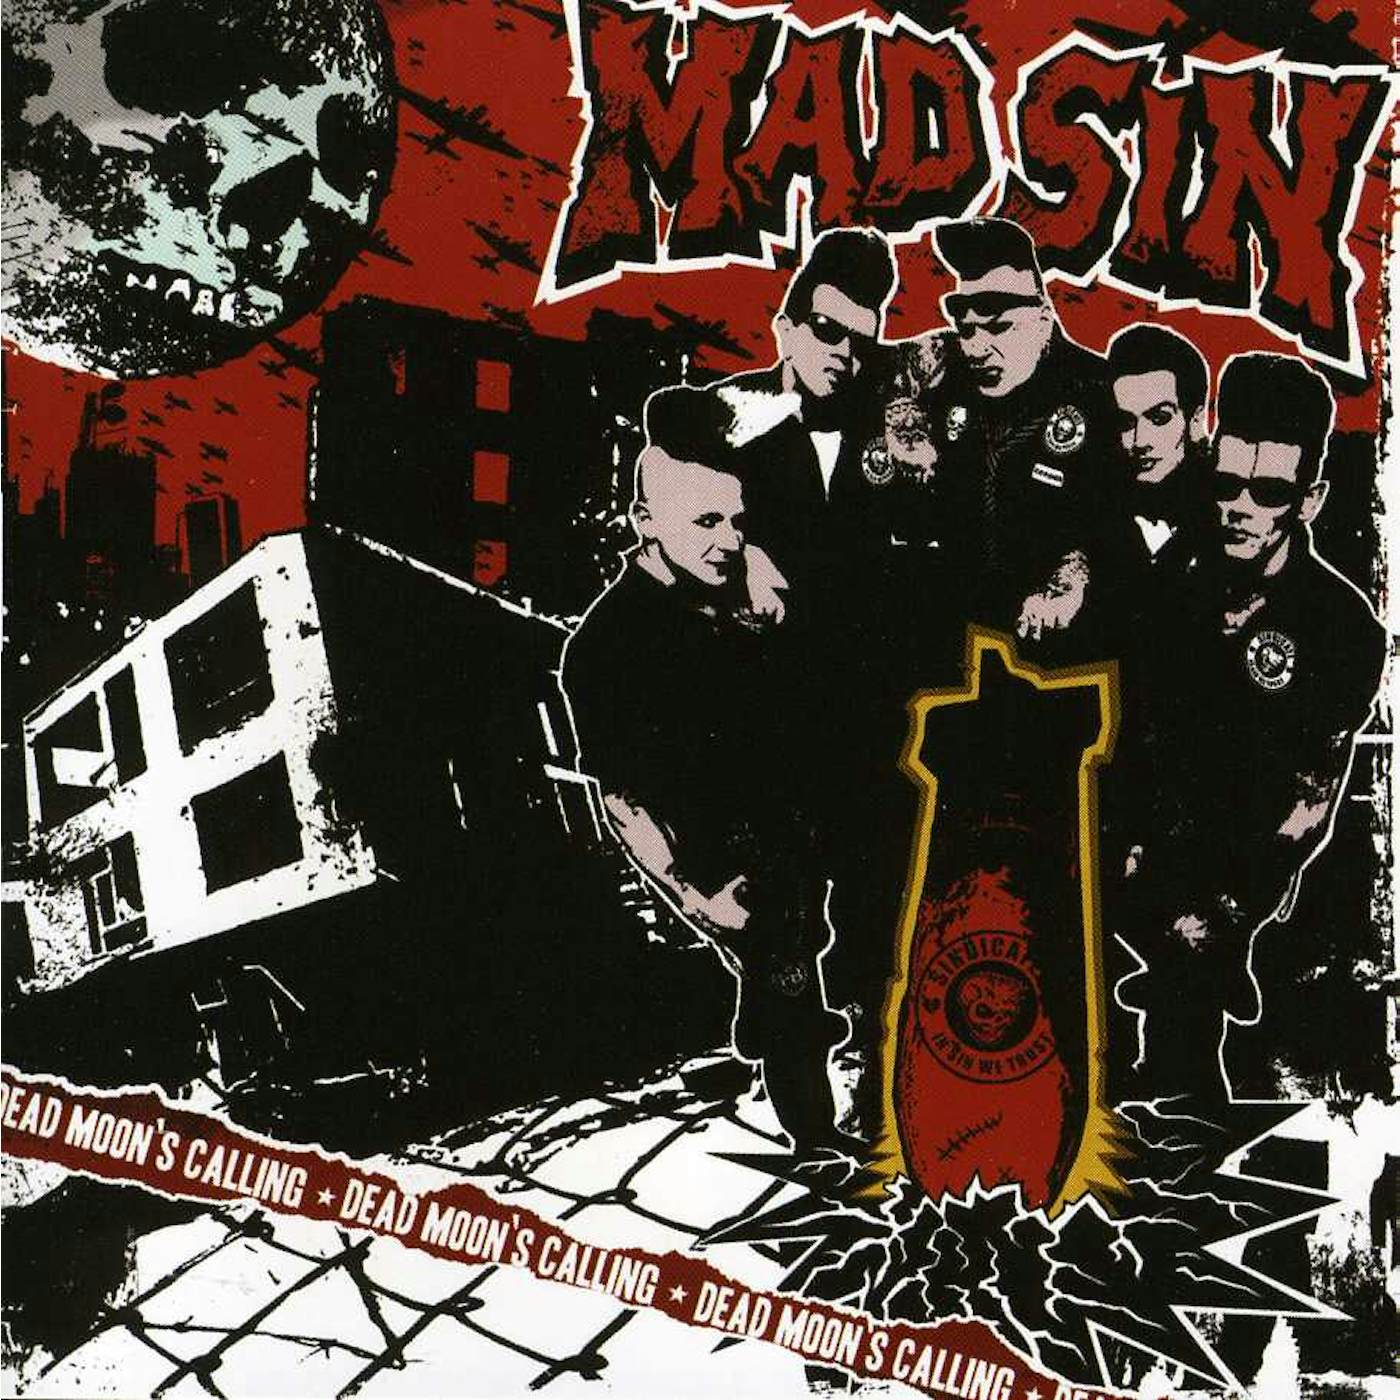 Mad Sin DEAD MOON'S CALLING CD